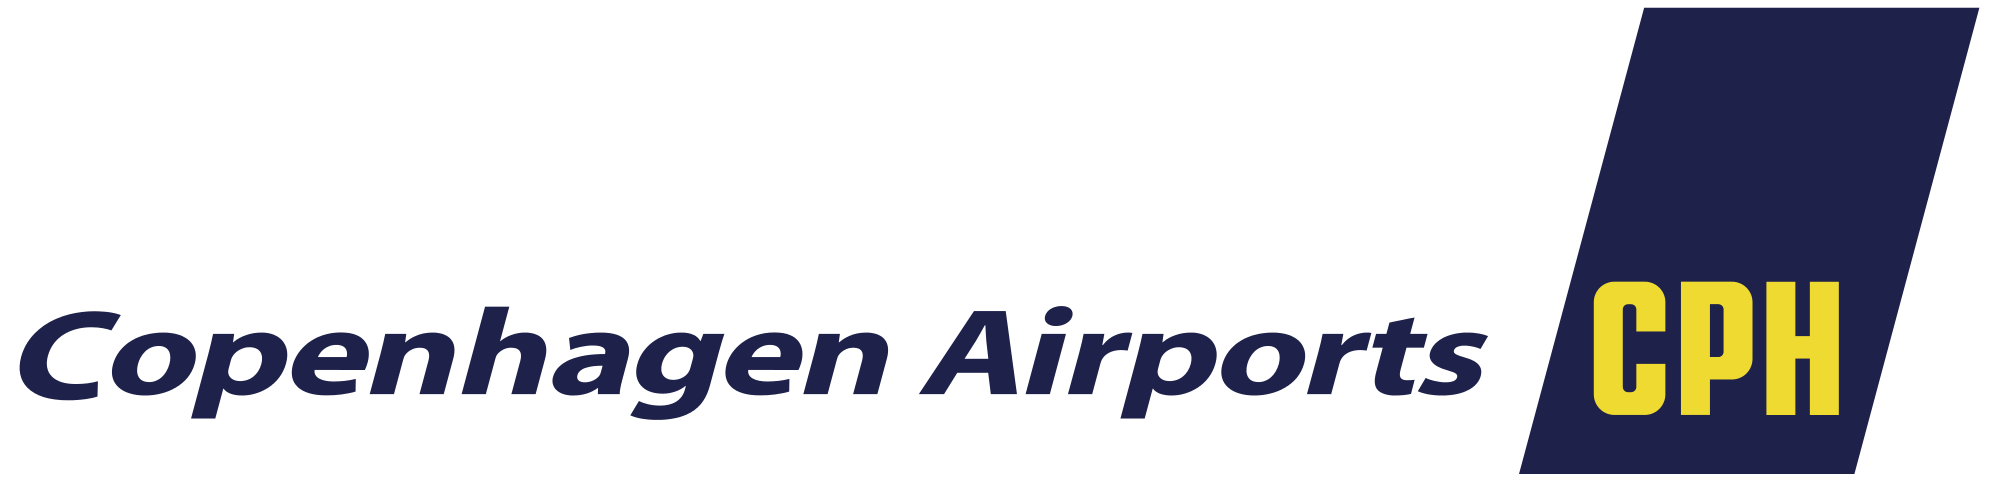 Airports Logo - Copenhagen Airports Logo.svg